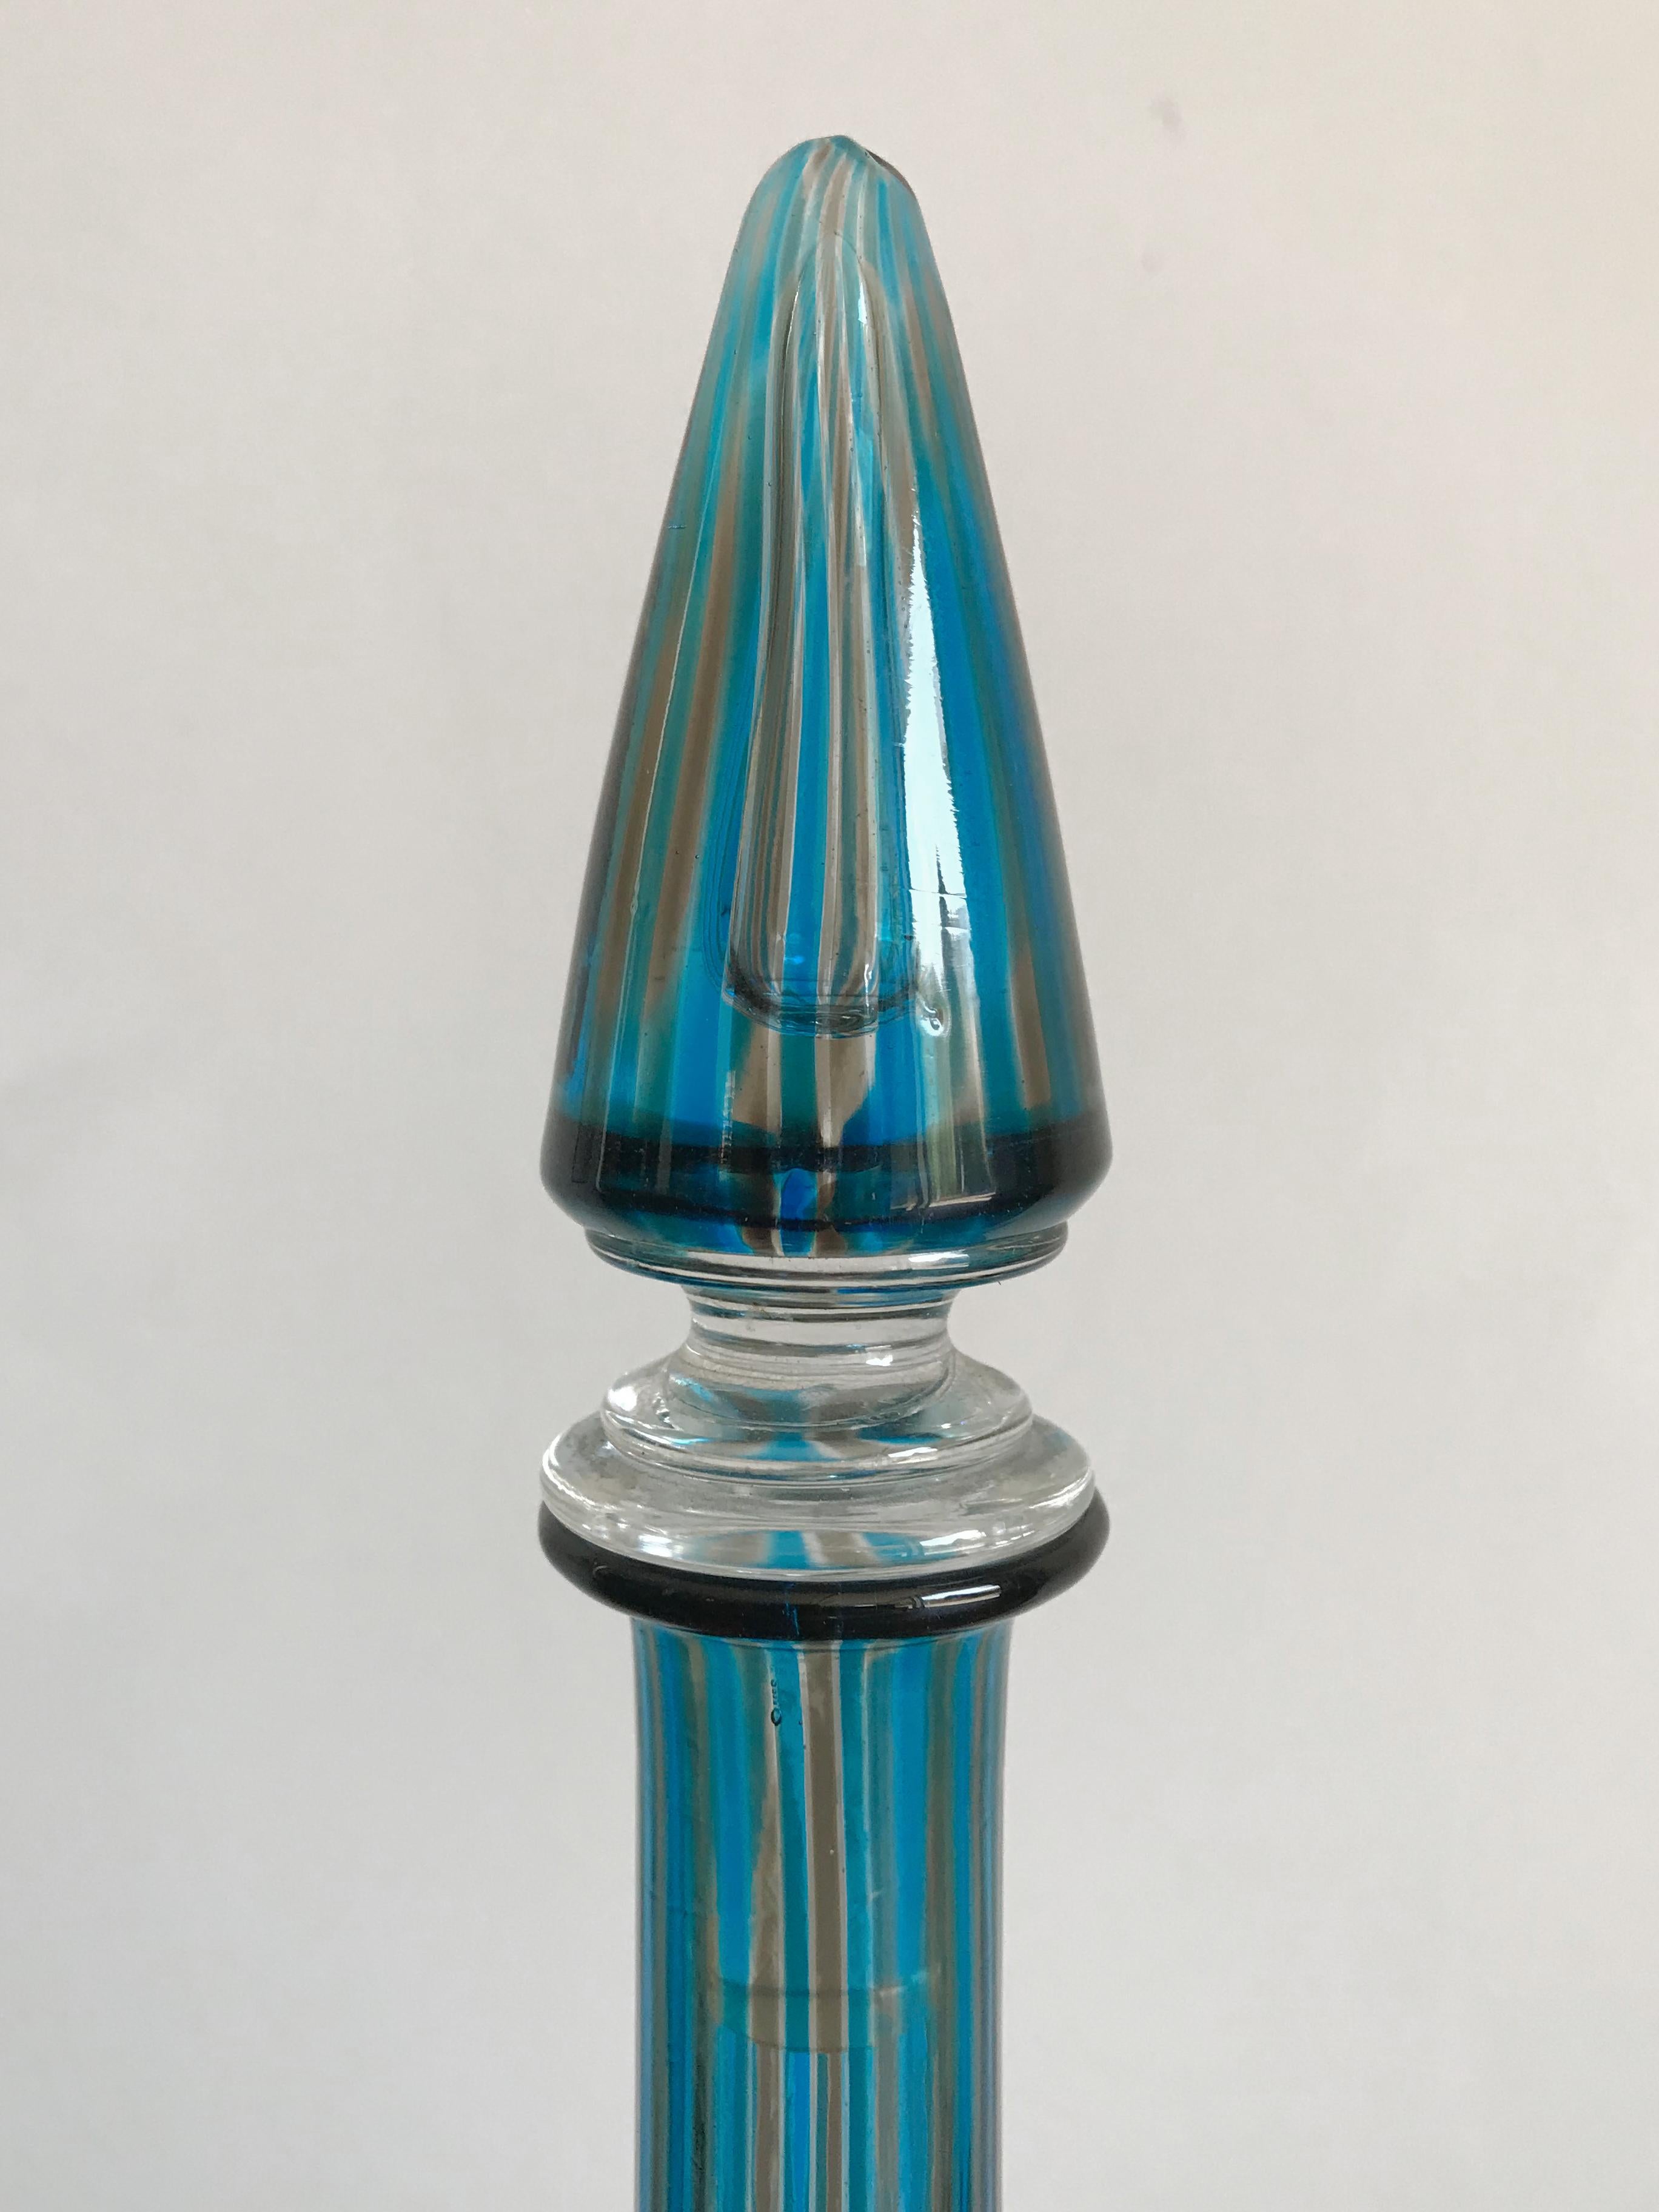 Italian Gio Ponti for Venini Italy Light Blue and Gray Glass Bottle Series “Morandiane”